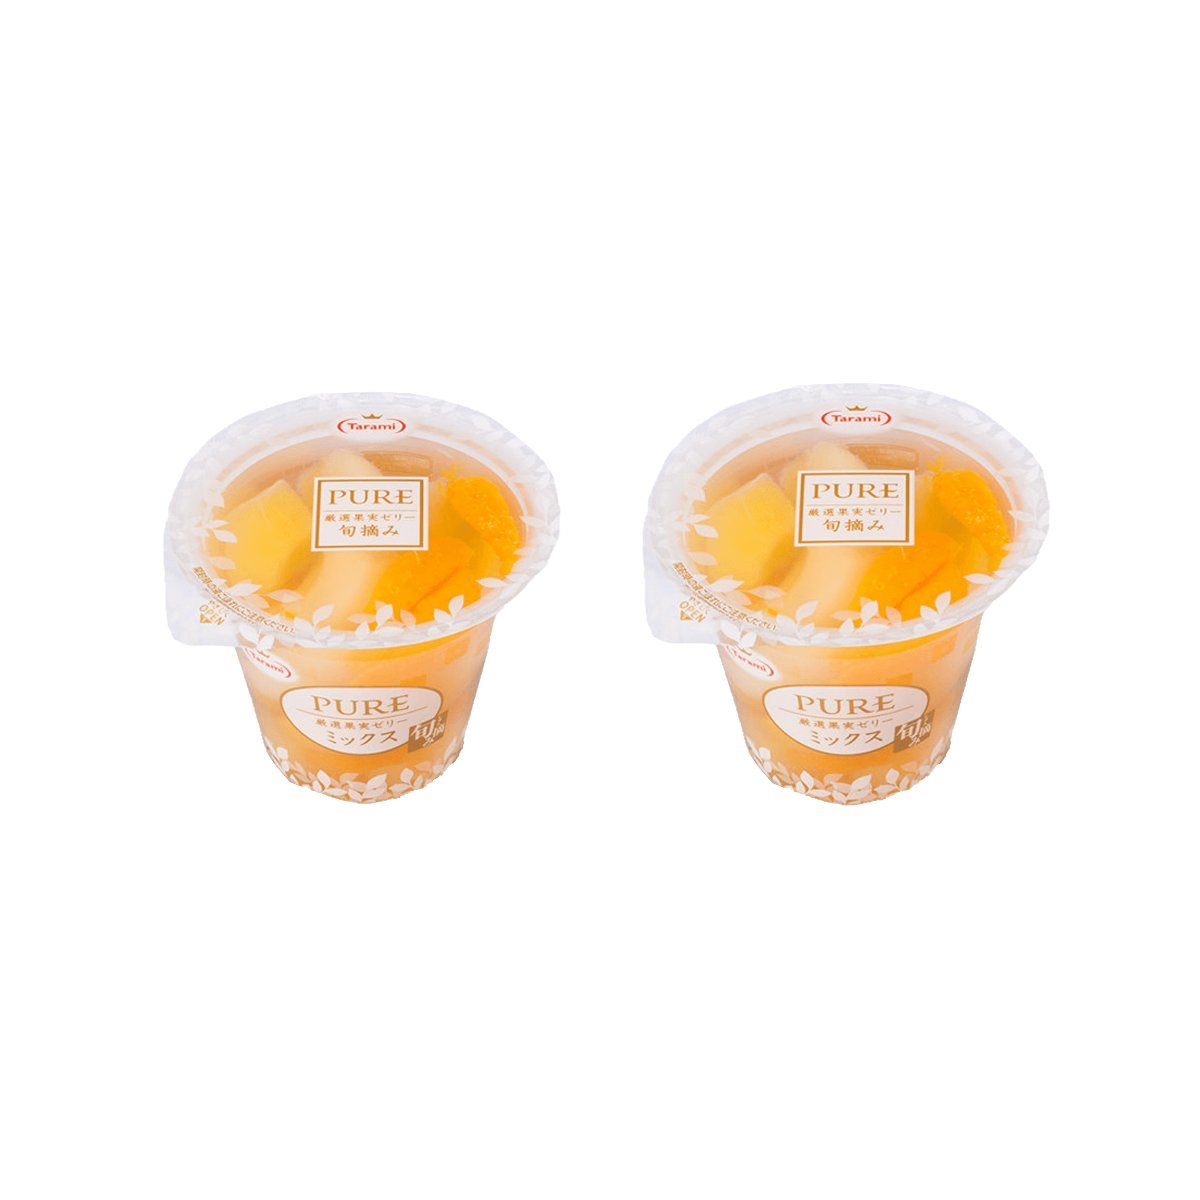 Tarami Tarami Pure Series Mix Fruit Jelly X2 Best Before Date 17 11 21 Hktvmall Online Shopping